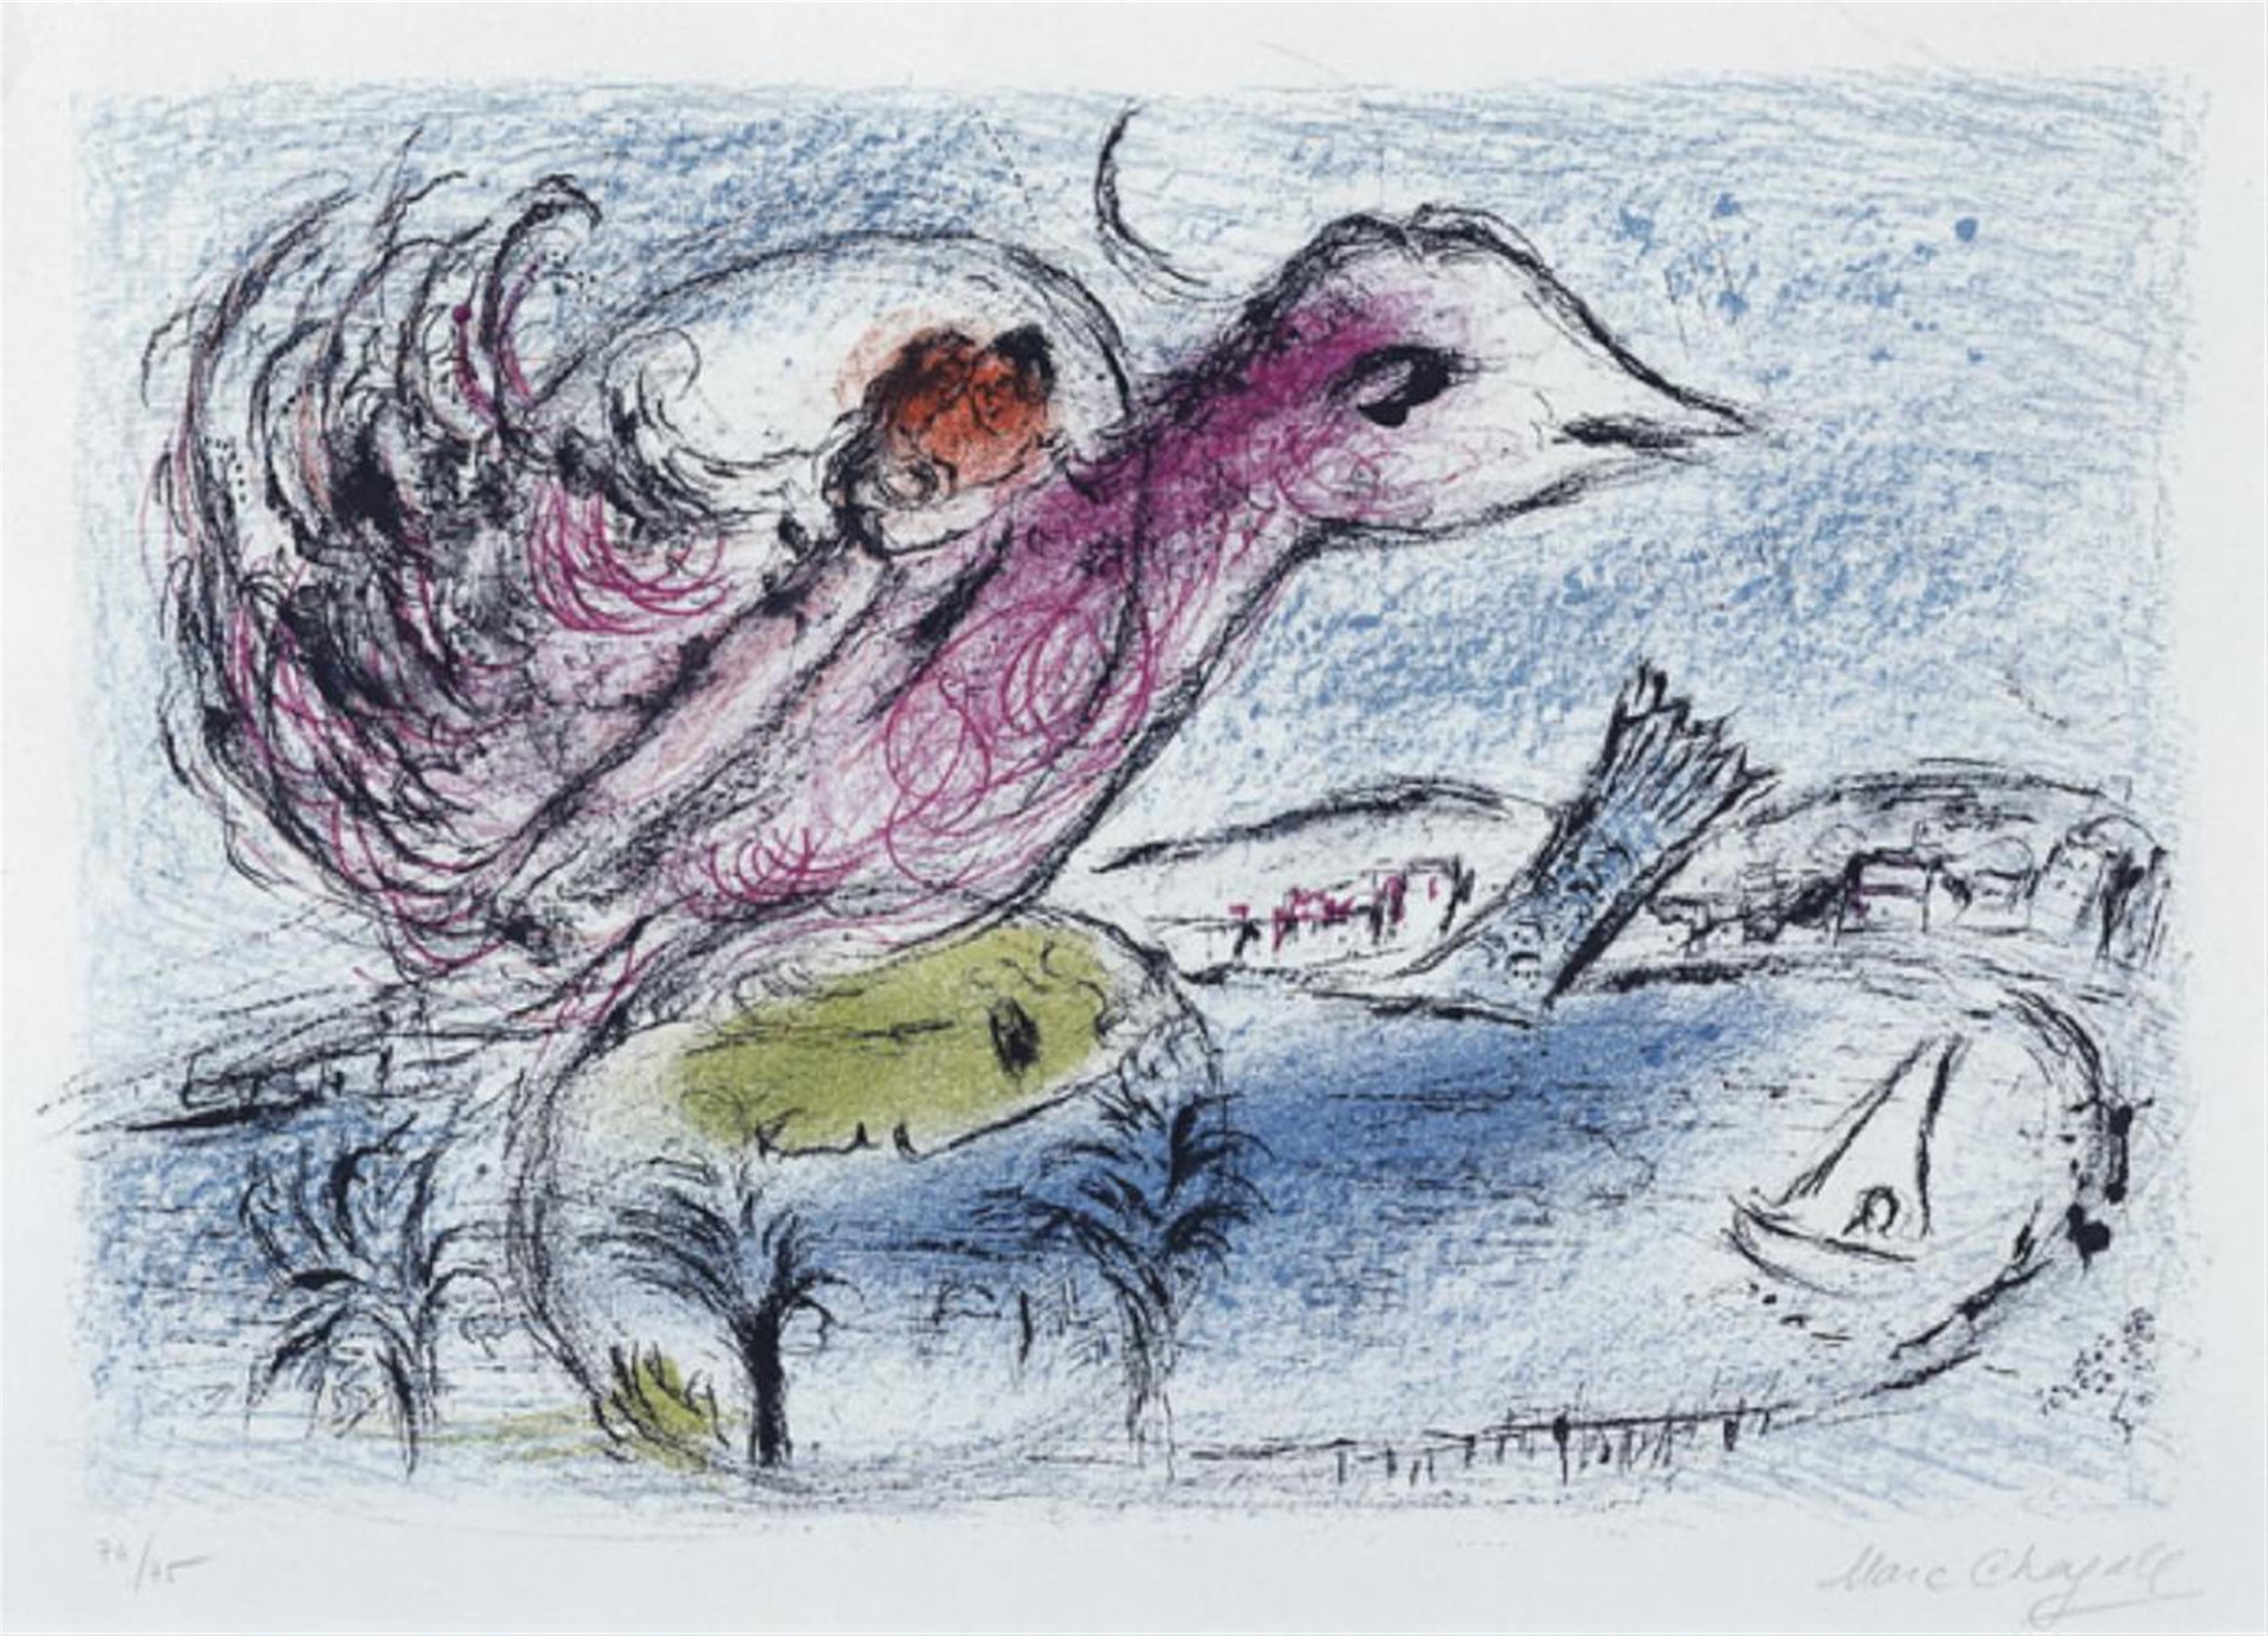 Marc Chagall - Die Bucht - image-1